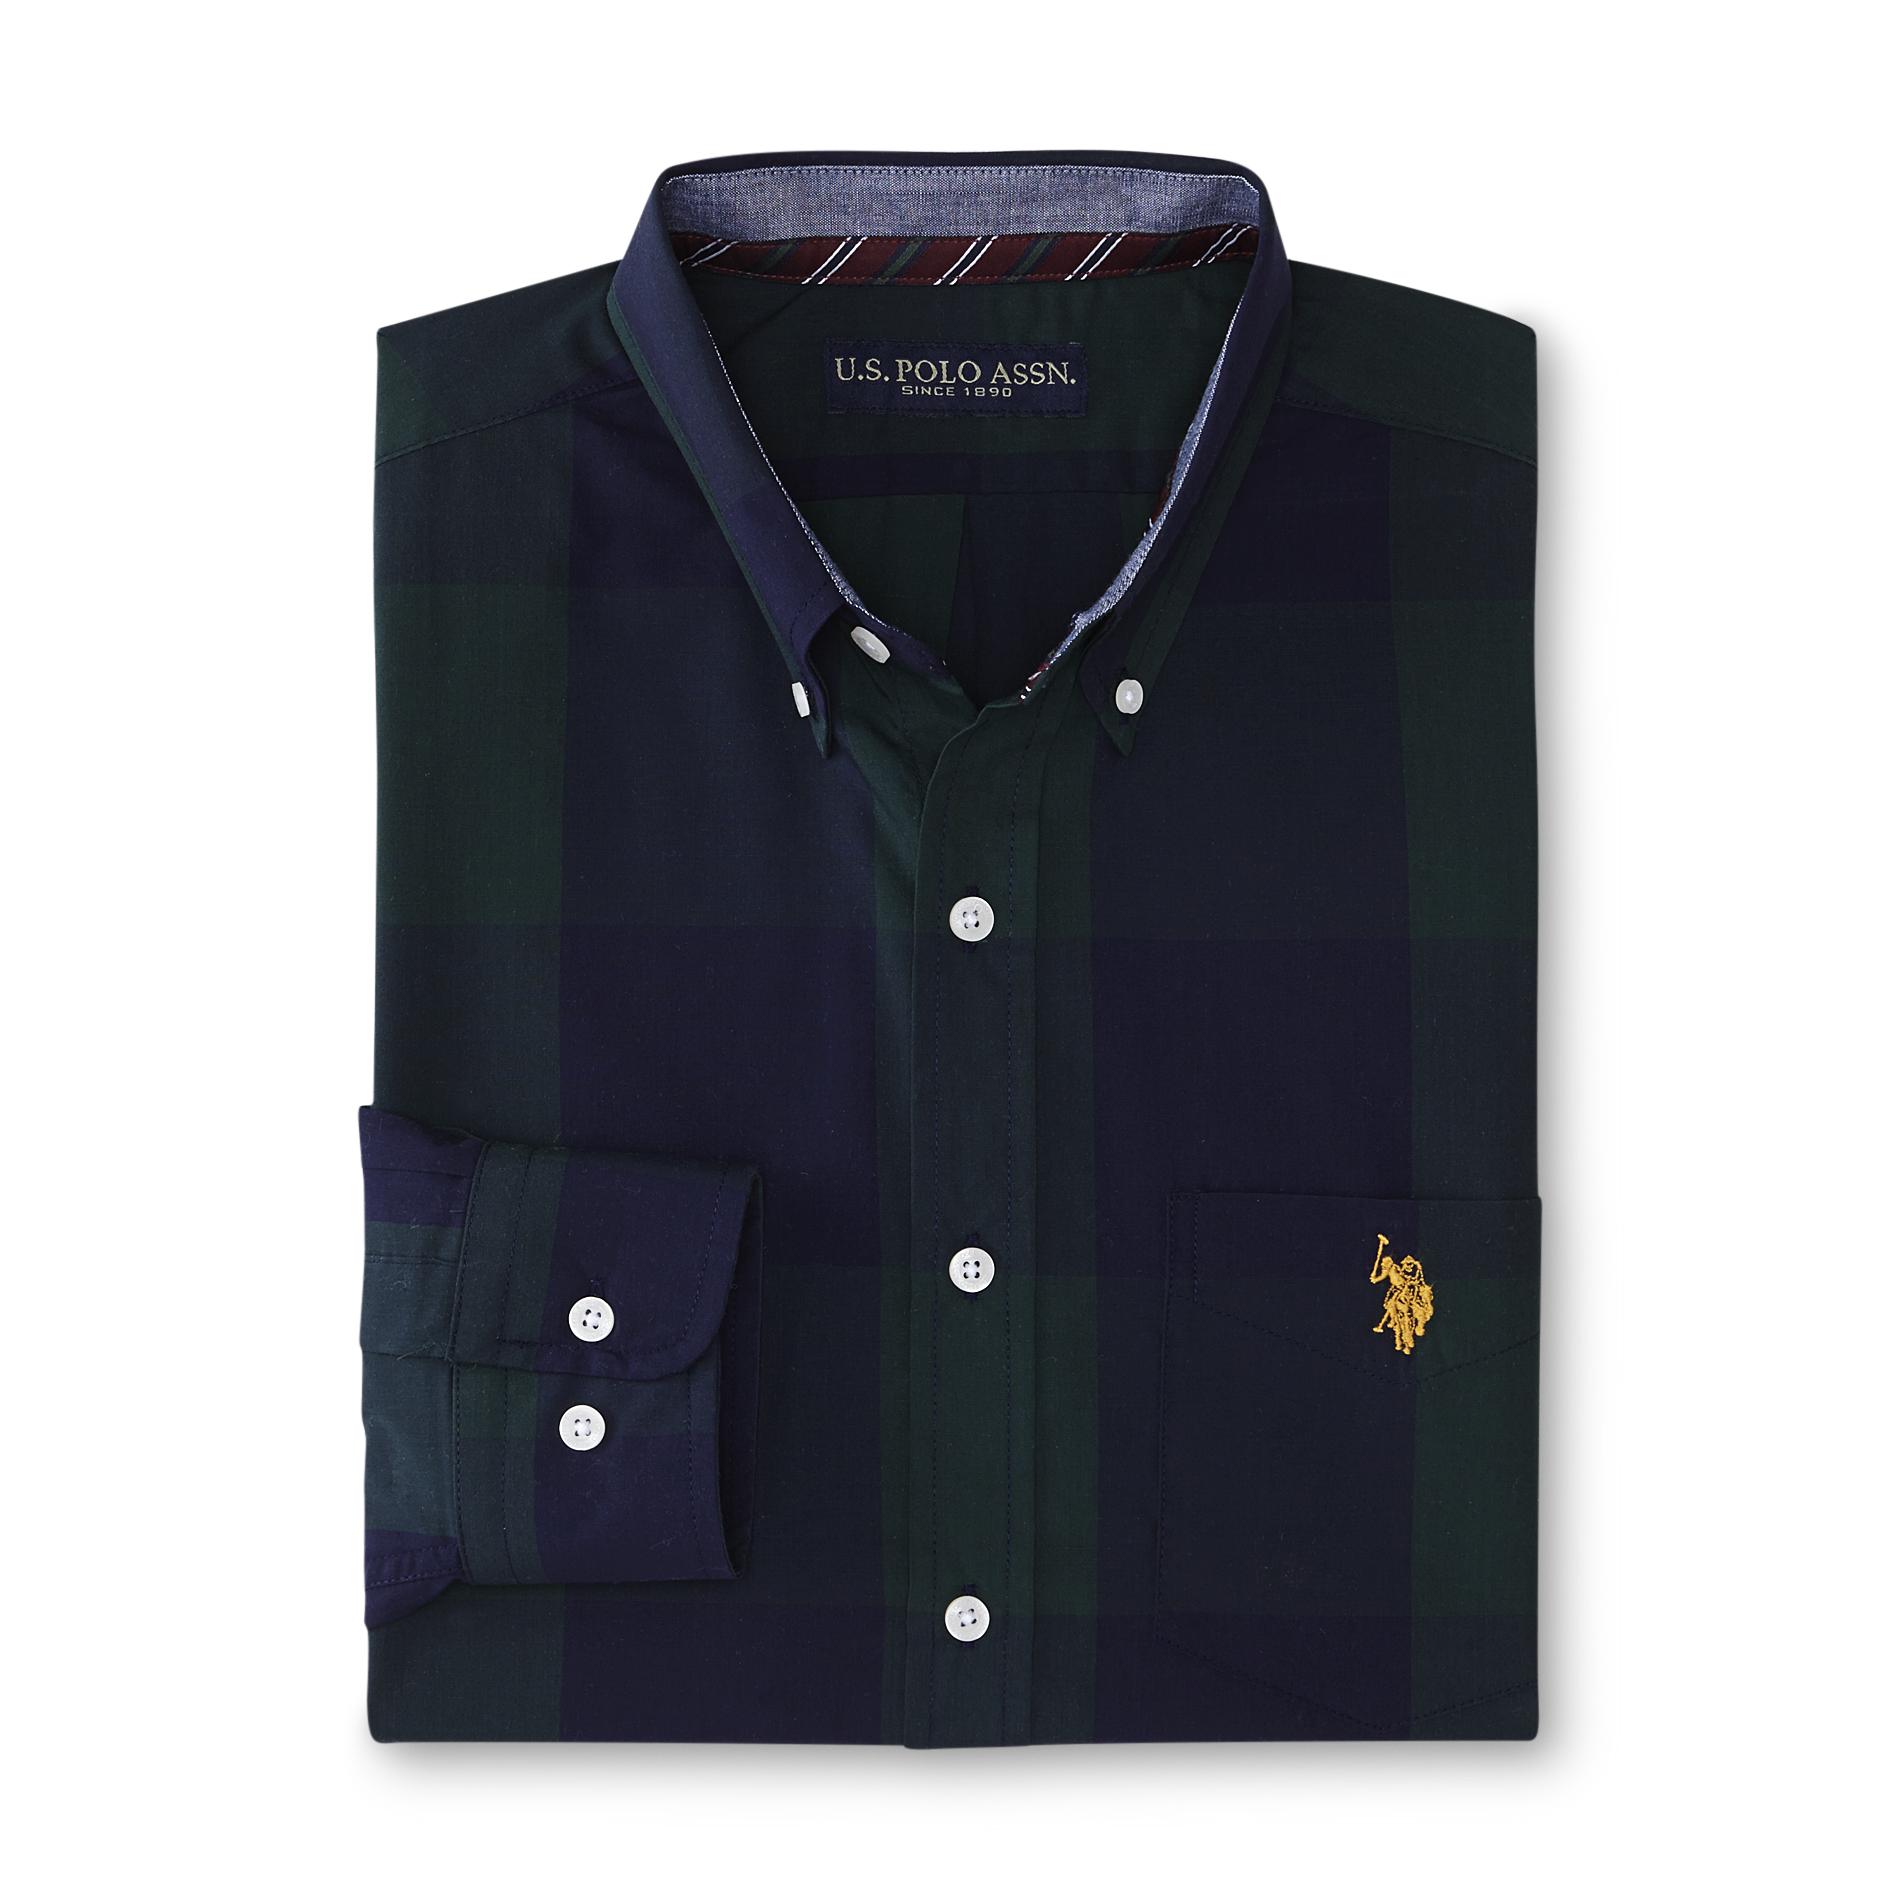 U.S. Polo Assn. Men's Button-Front Shirt - Striped